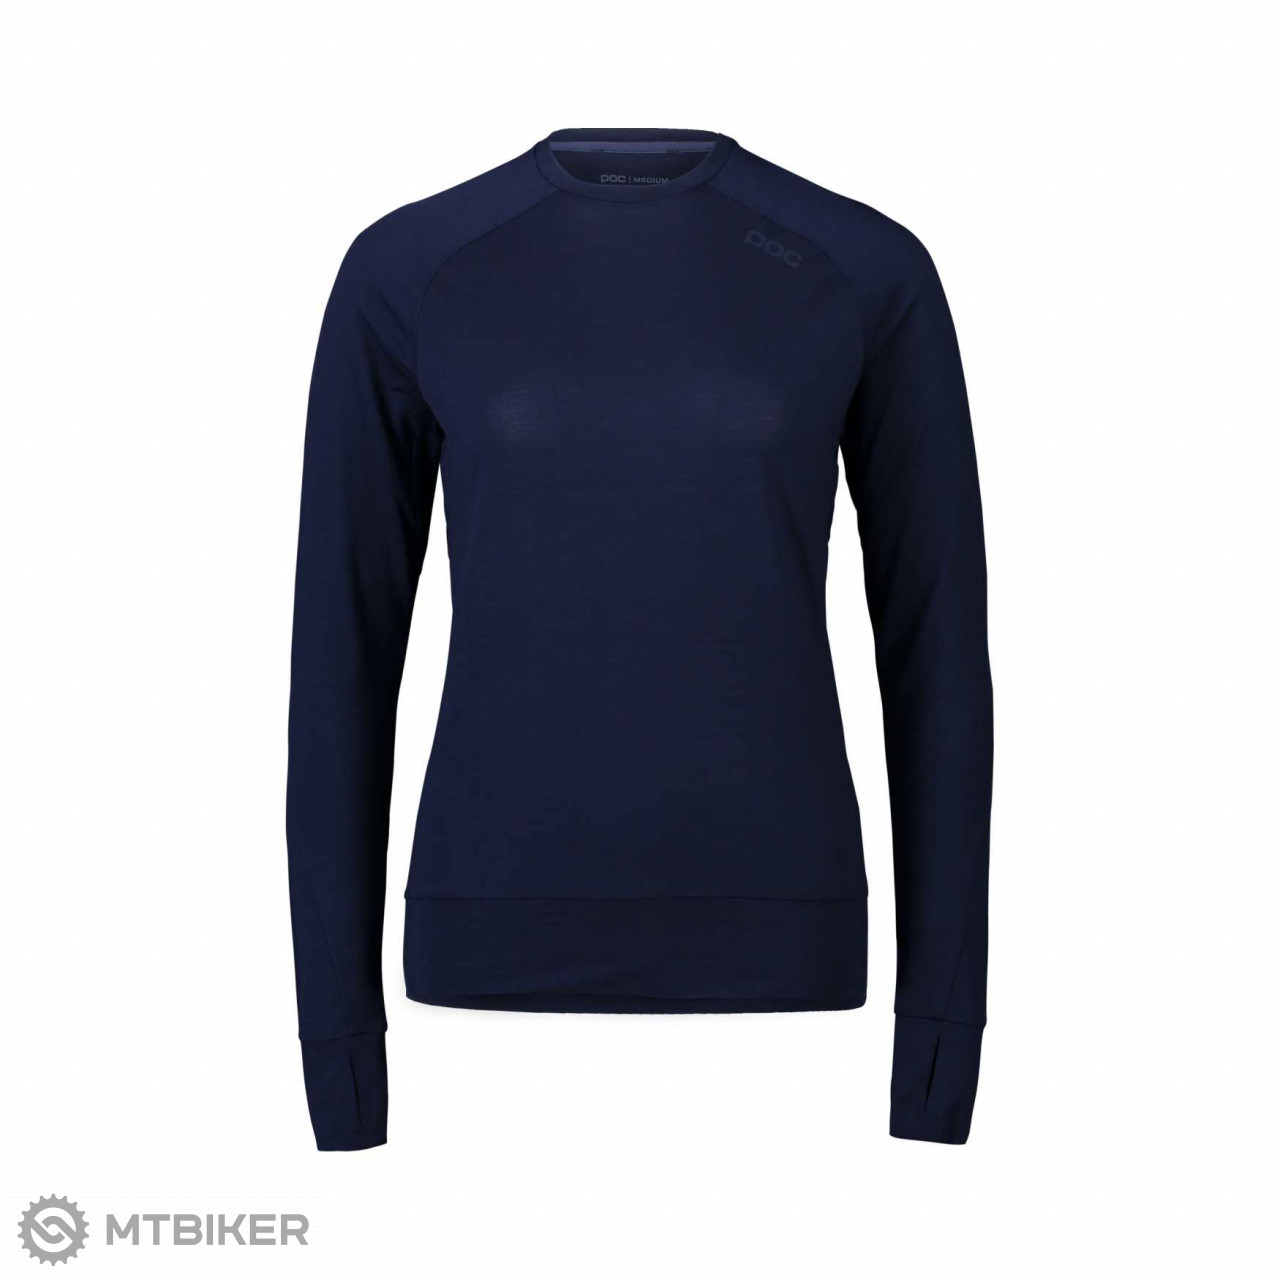 POC Light Merino Jersey Damen-Sweatshirt, turmaline navy